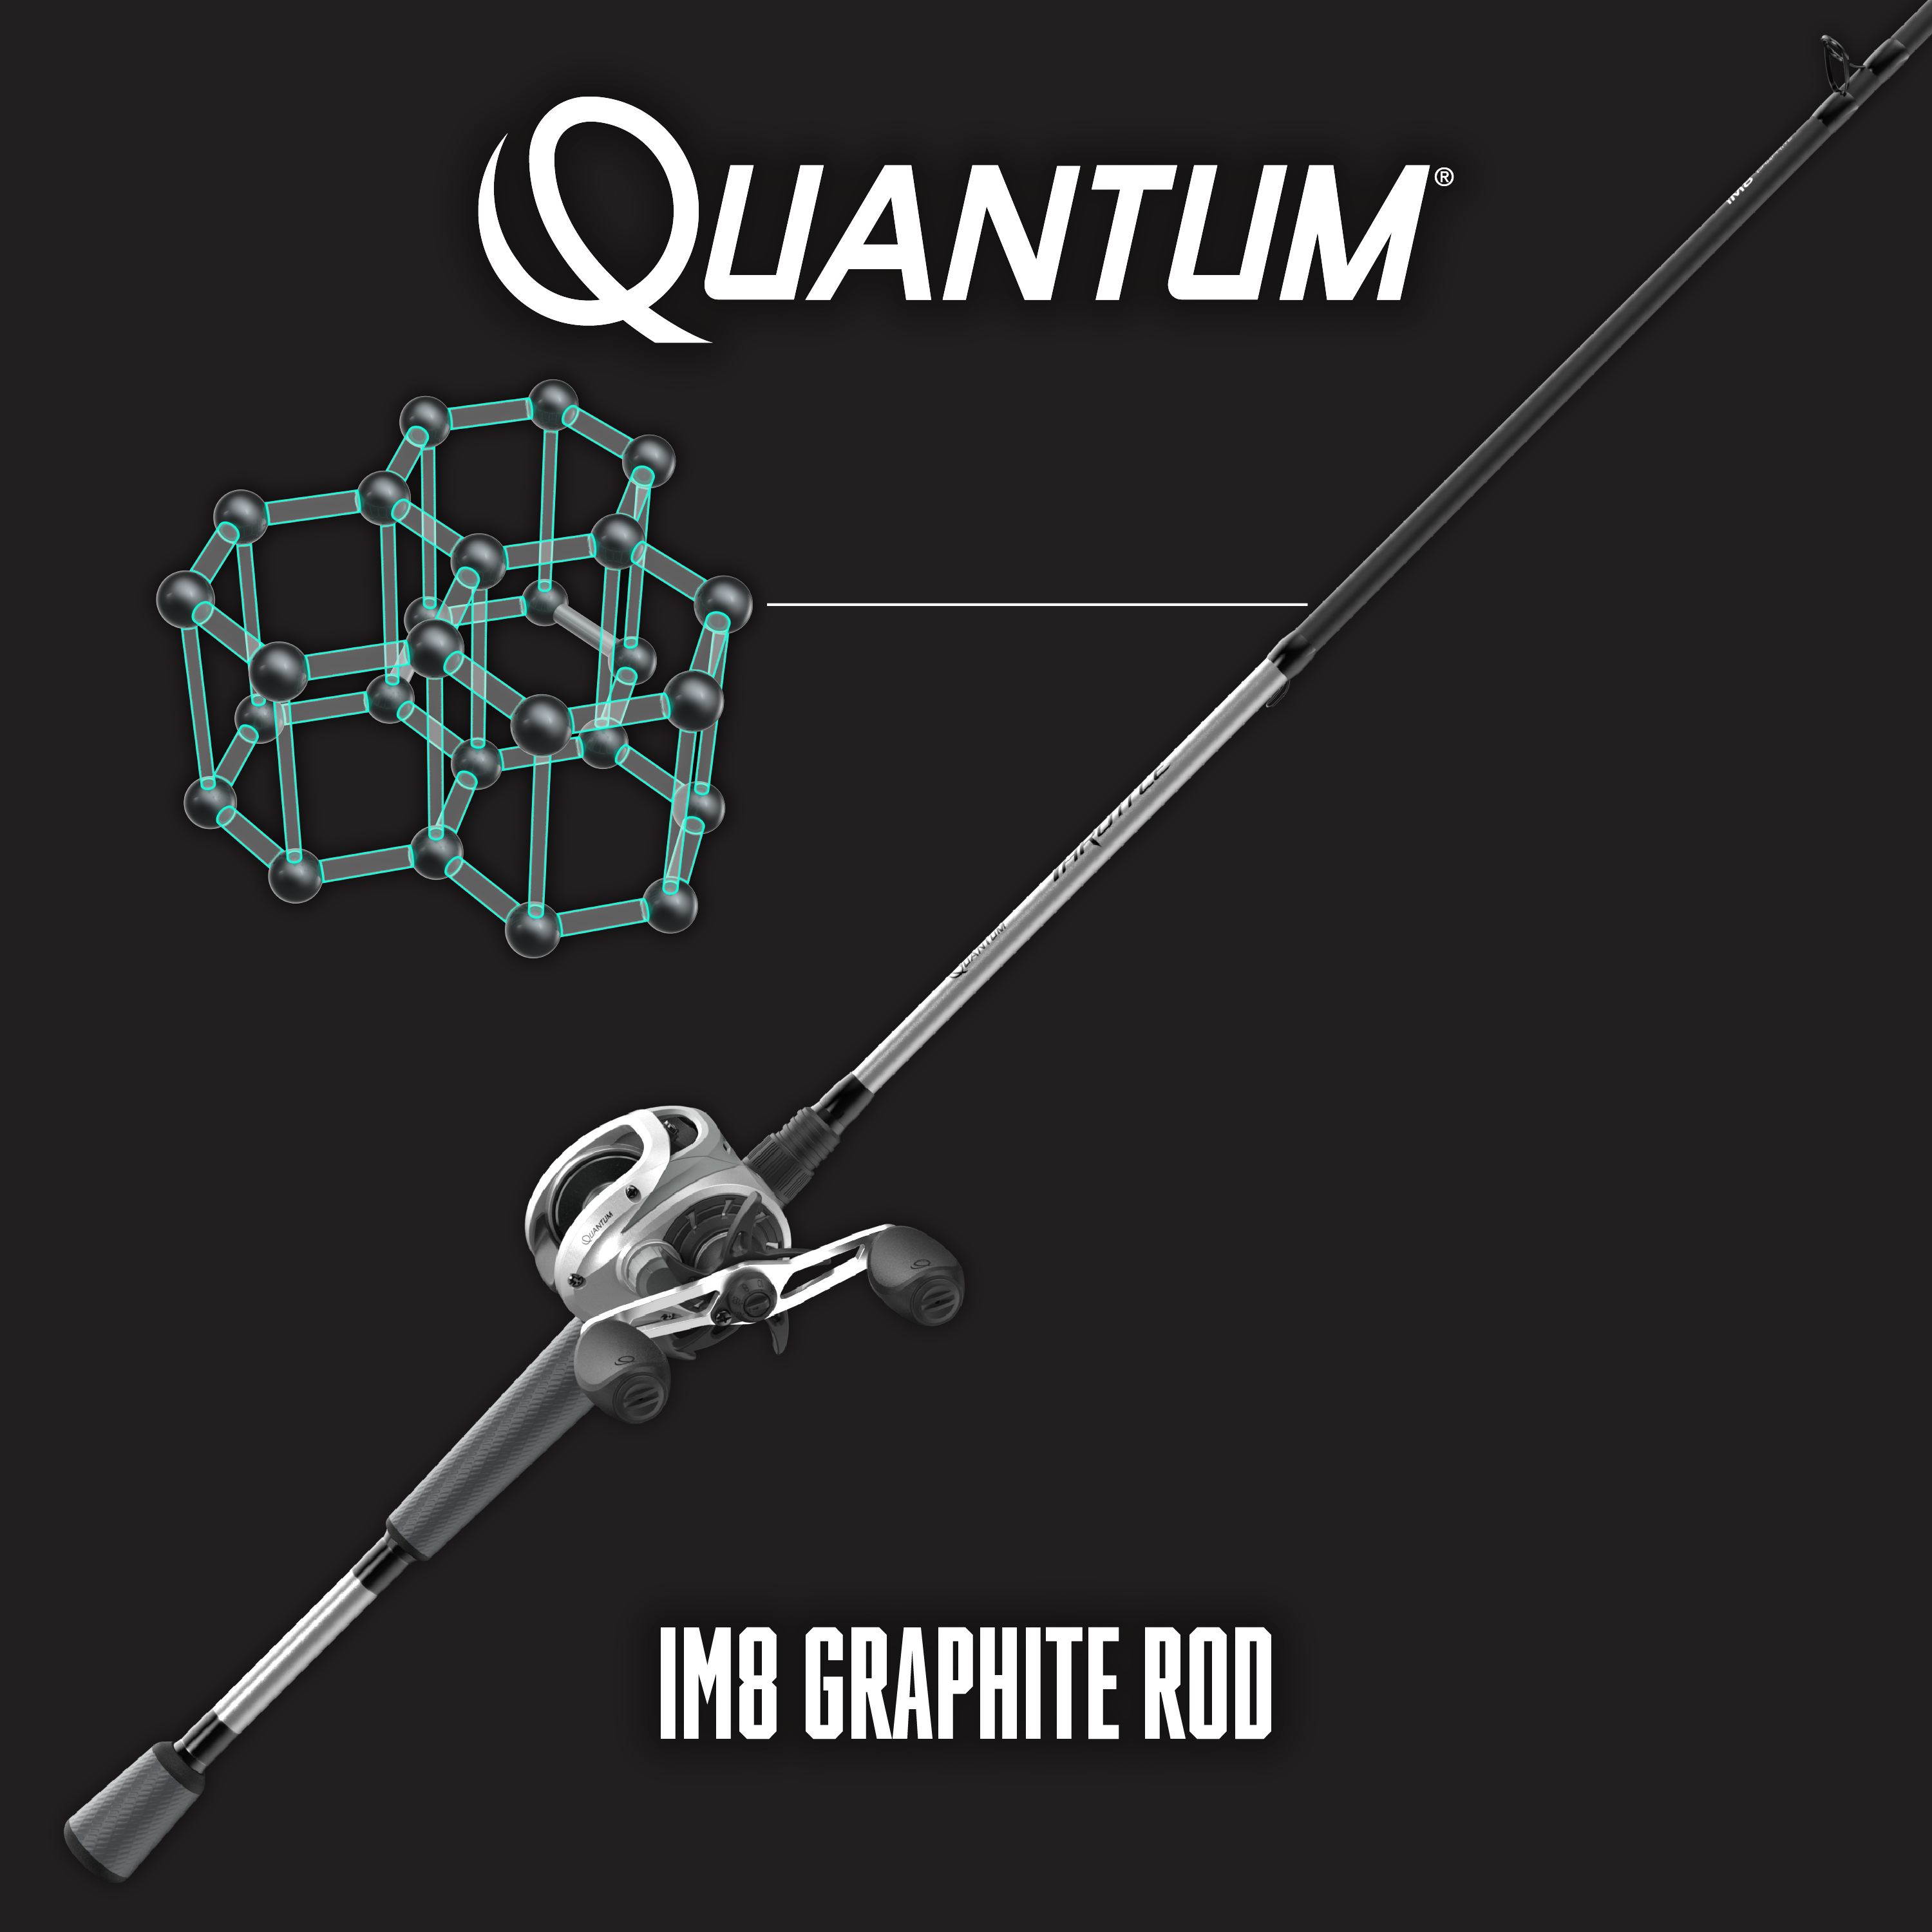 Throttle - Baitcast - Combo, Quantum Fishing, Quality Fishing Gear